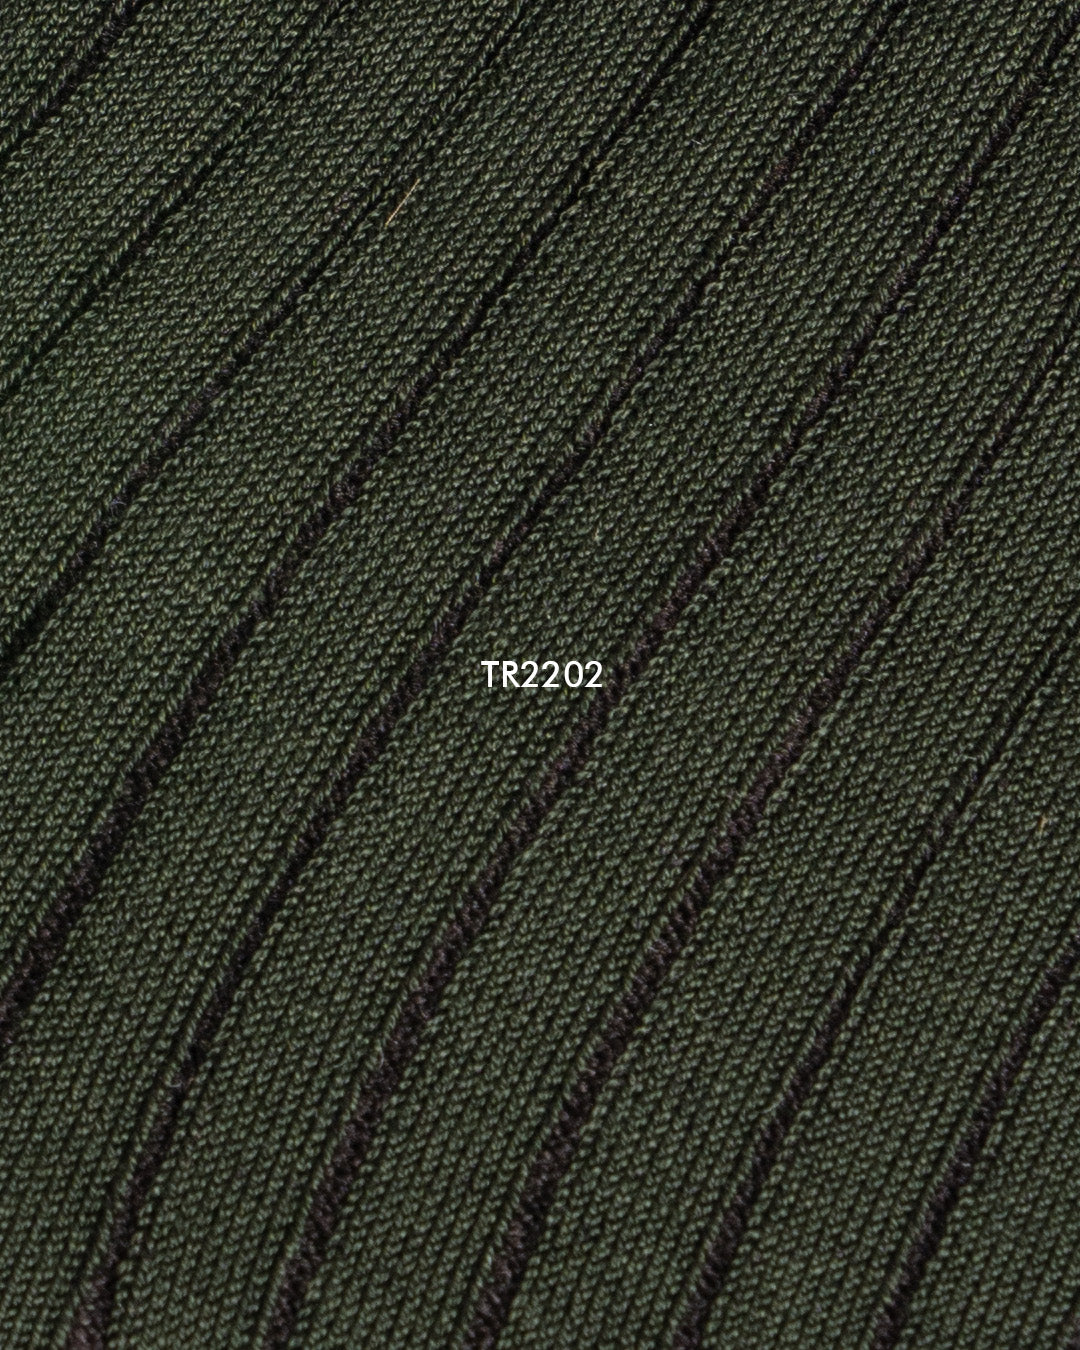 Votta Ribbed Twotone Green/Grey TR2202